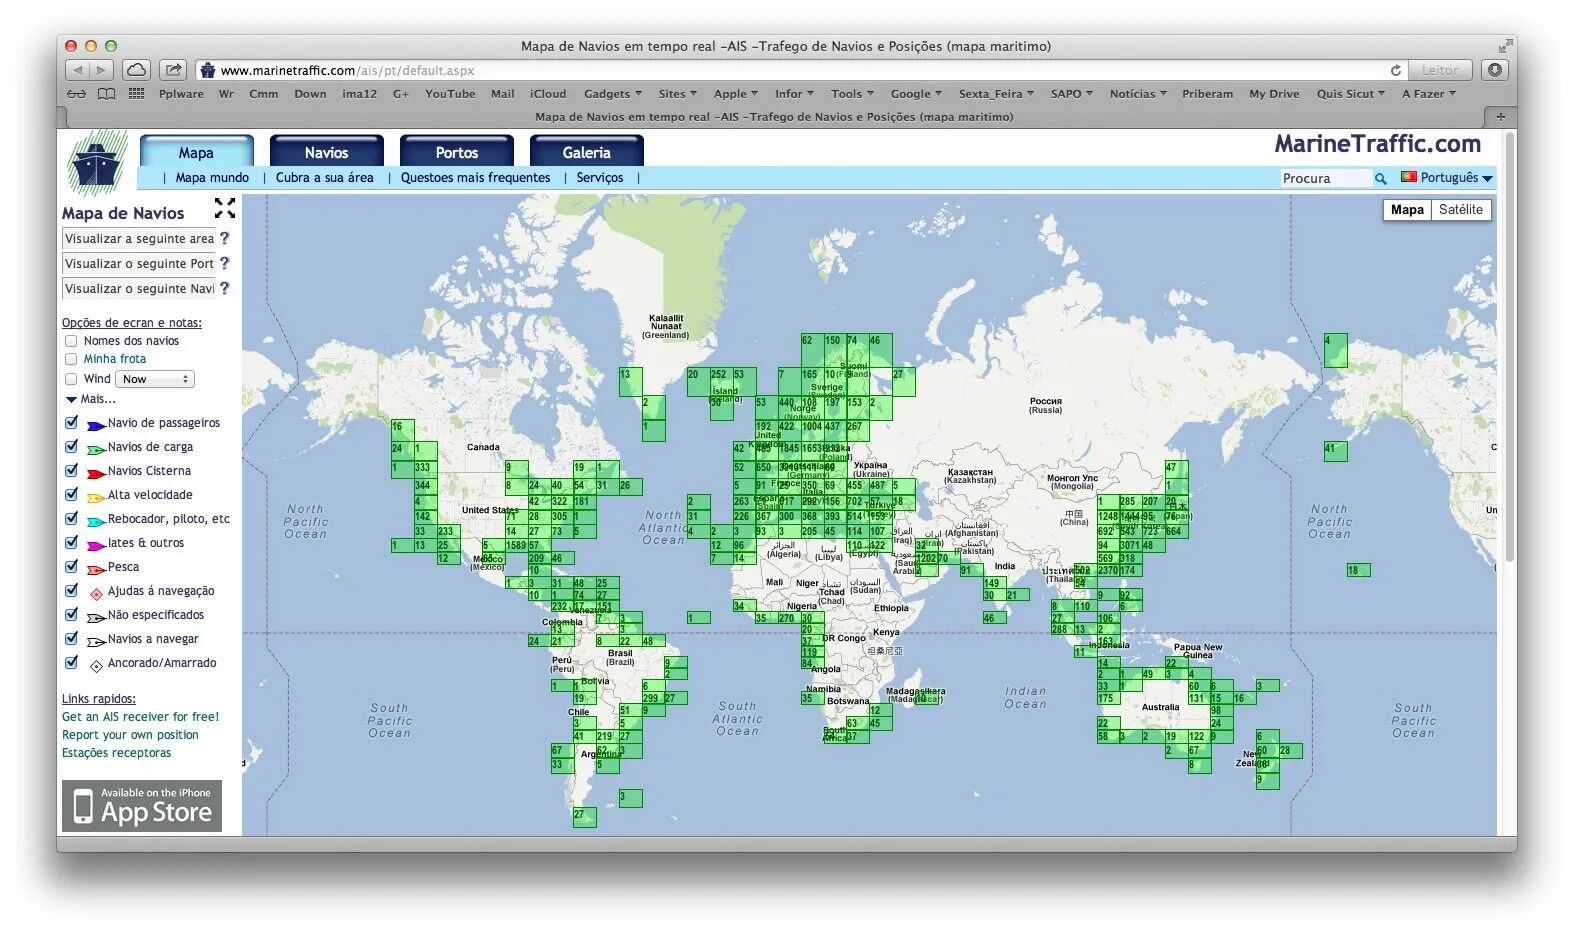 Реальная карта аис. Карта морского трафика. АИС карта. Карта морских судов в реальном времени.